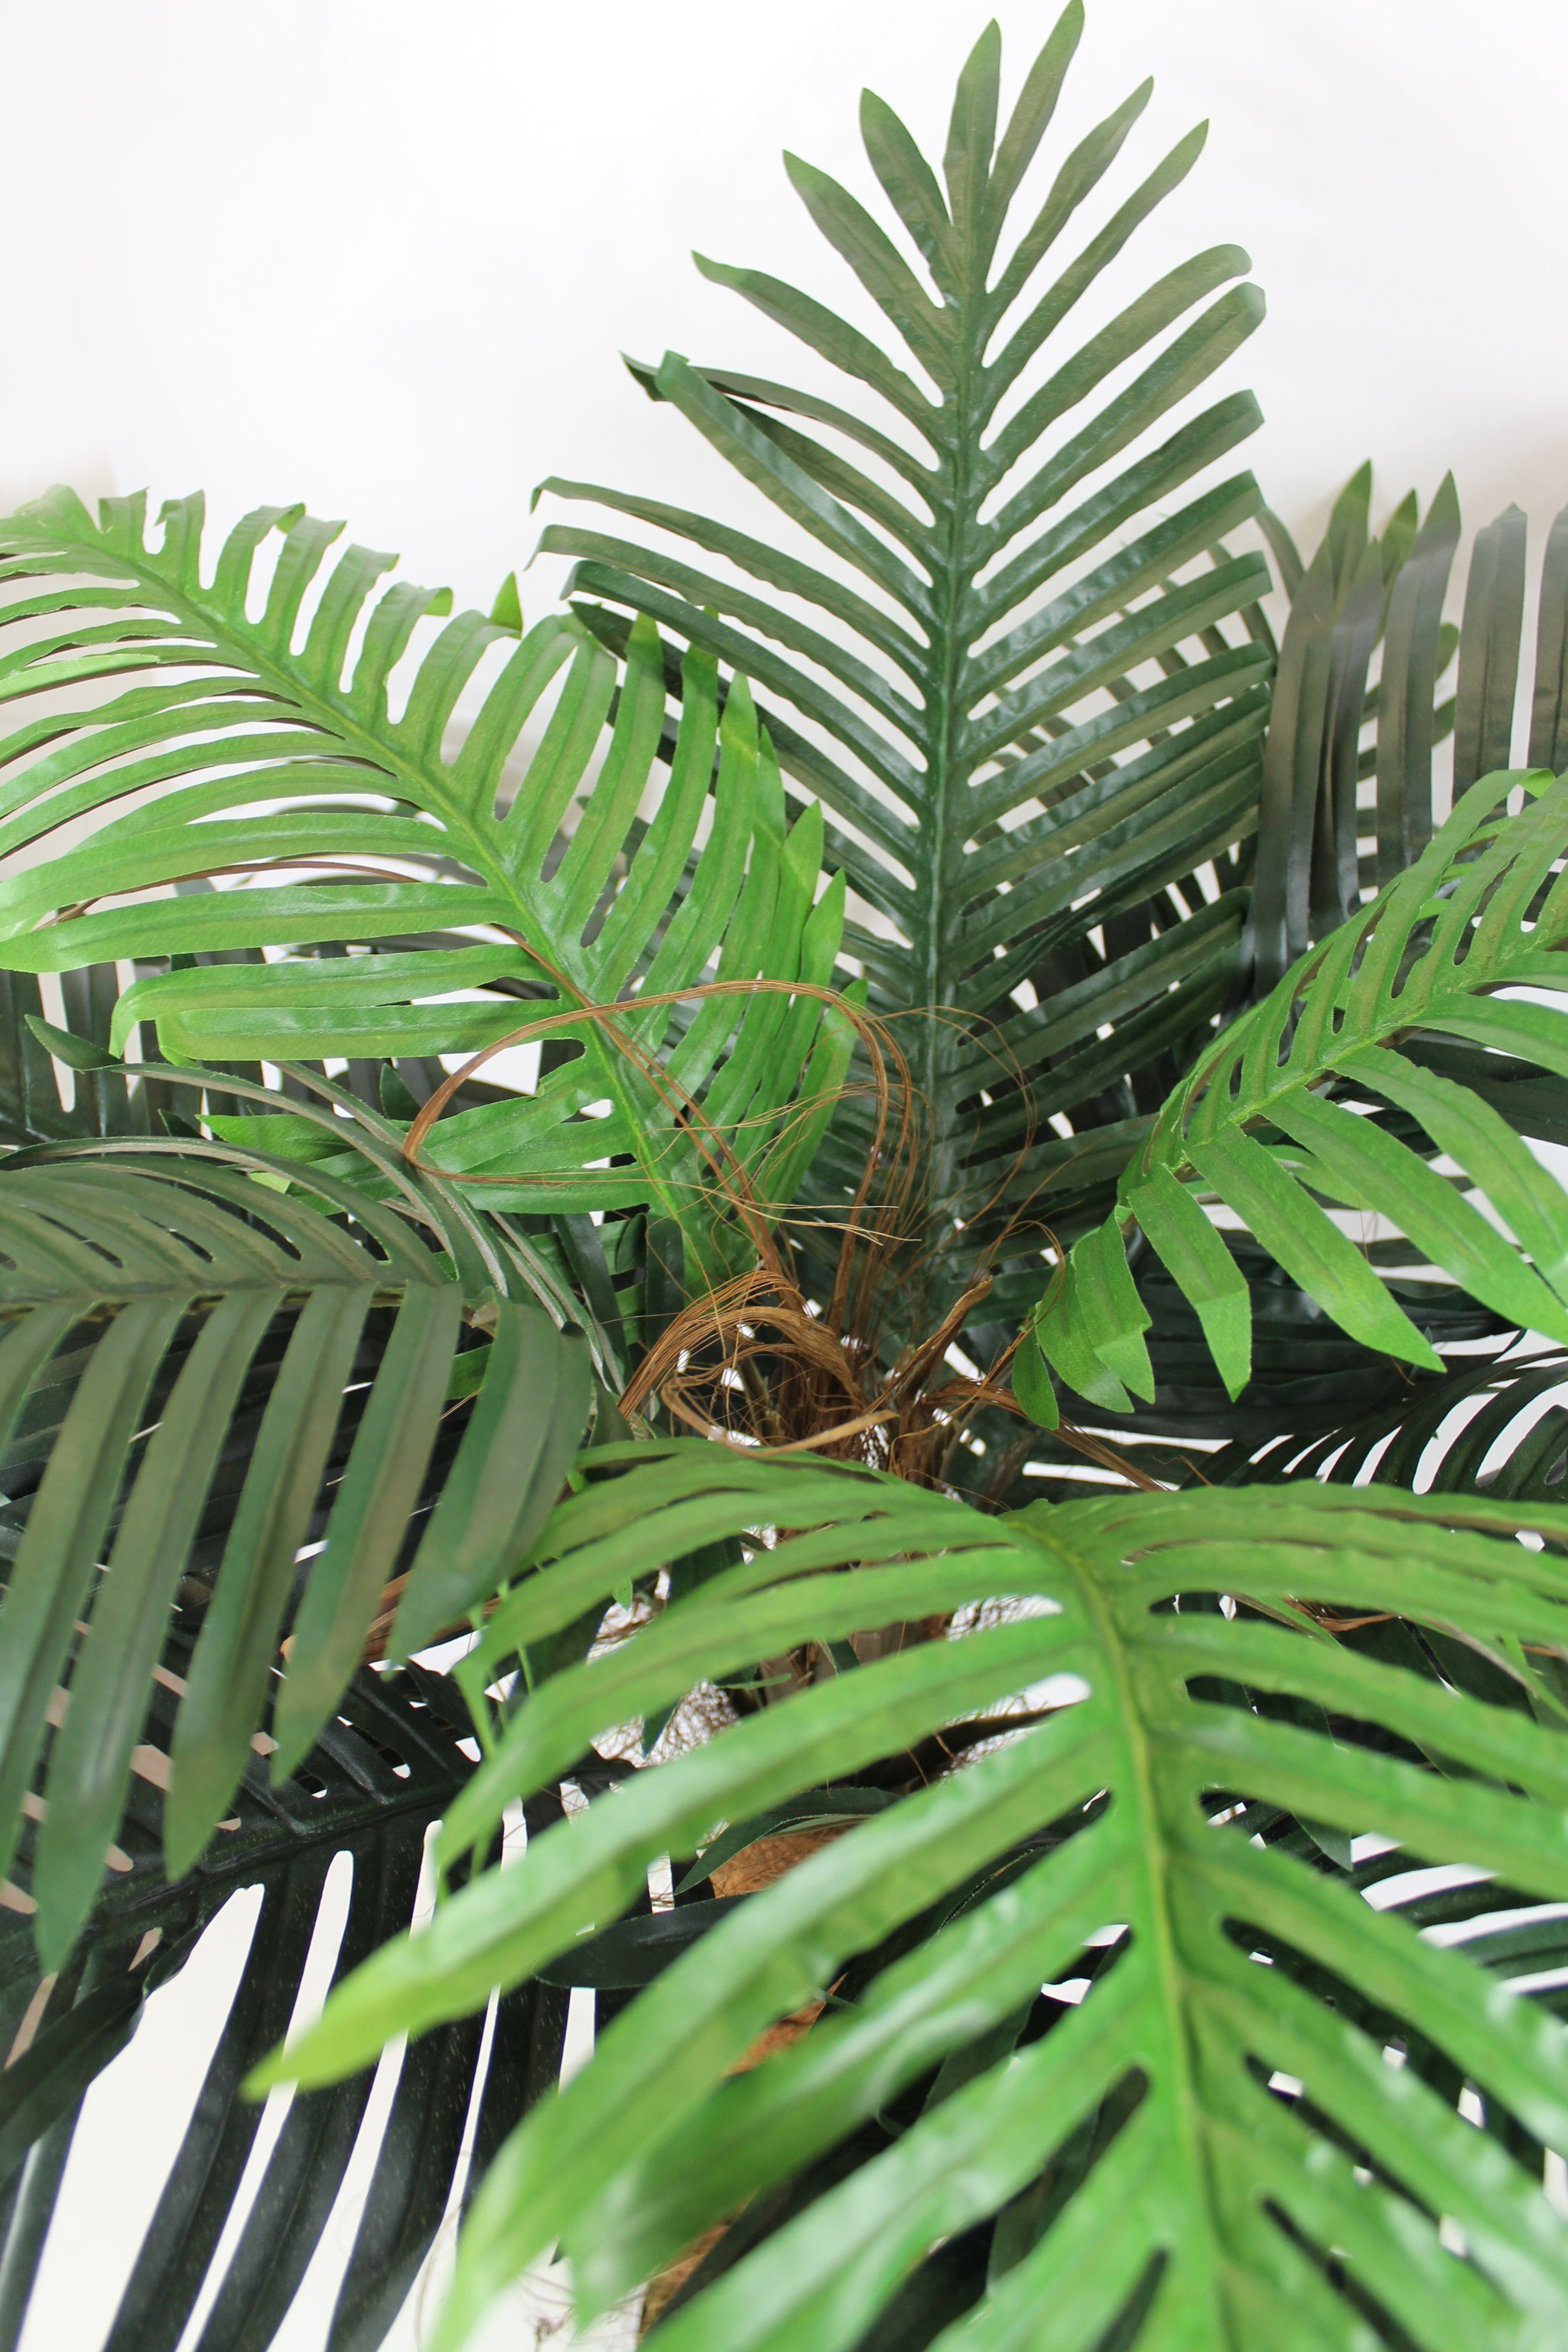 100 Höhe cm, 100 Arnusa, Palme, Palme wie echt Kunstpalme cm Pflanze künstliche Kunstpflanze Real-Touch